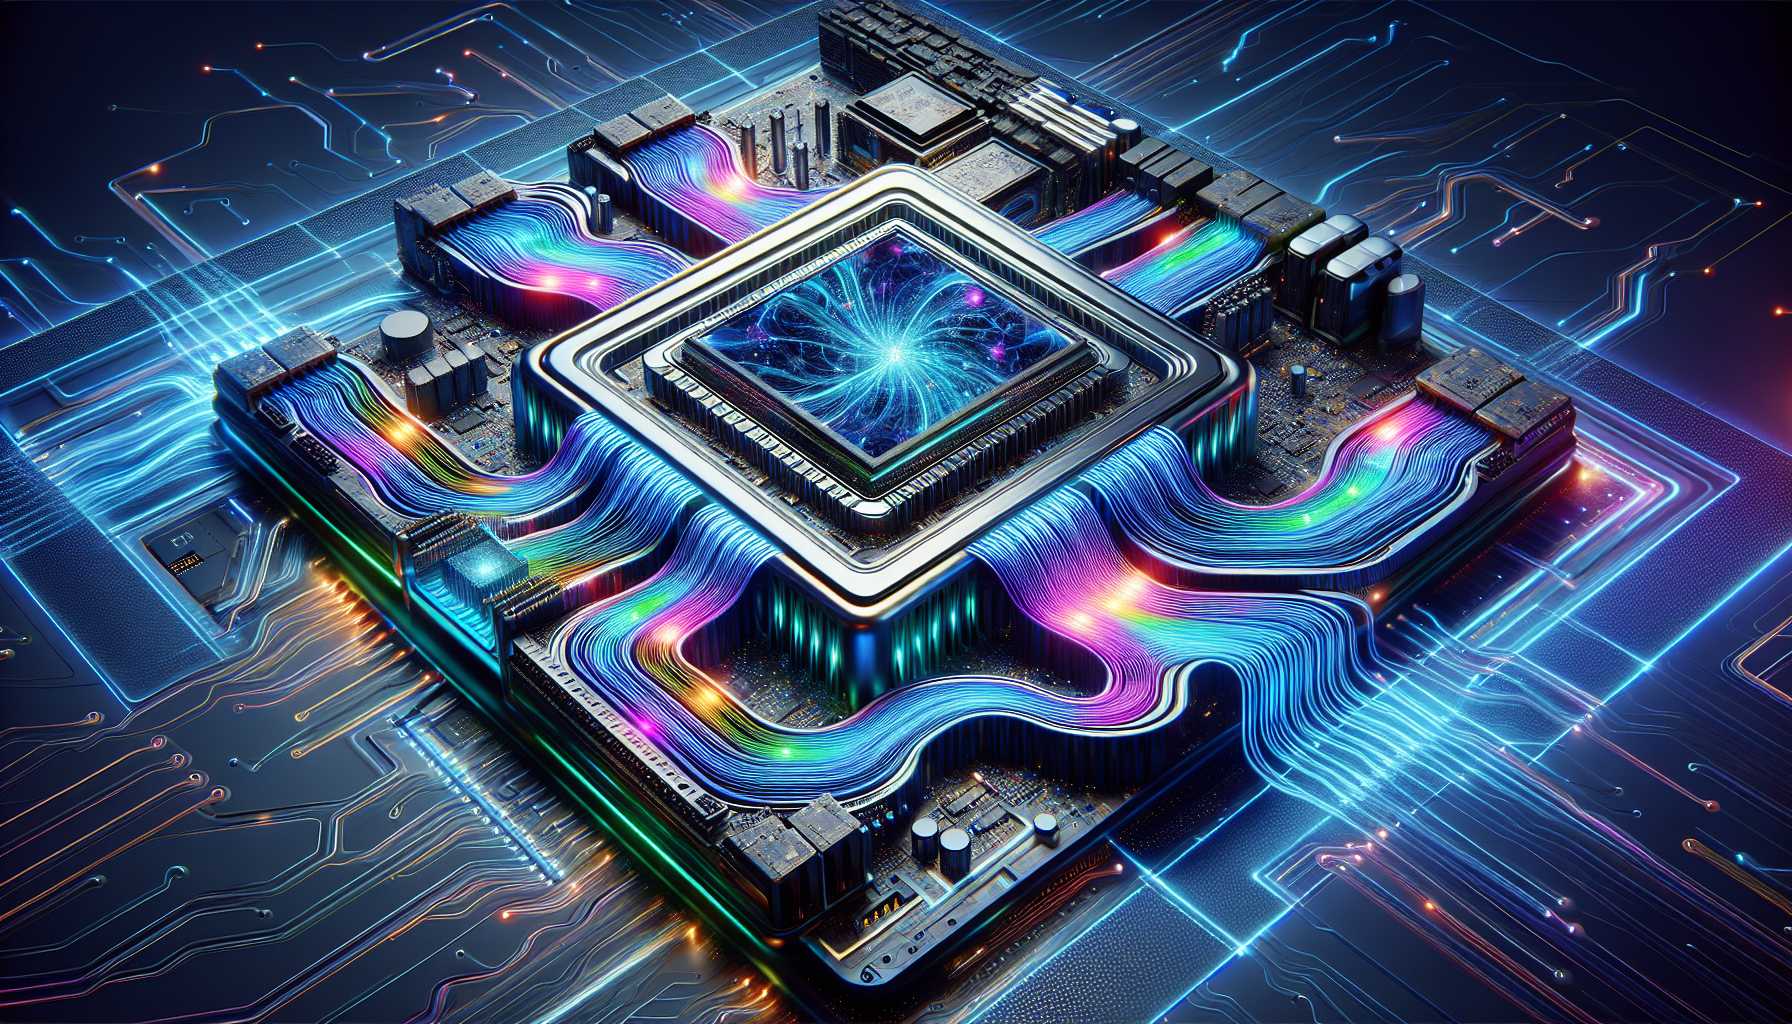 futuristic quantum computing processor by IonQ